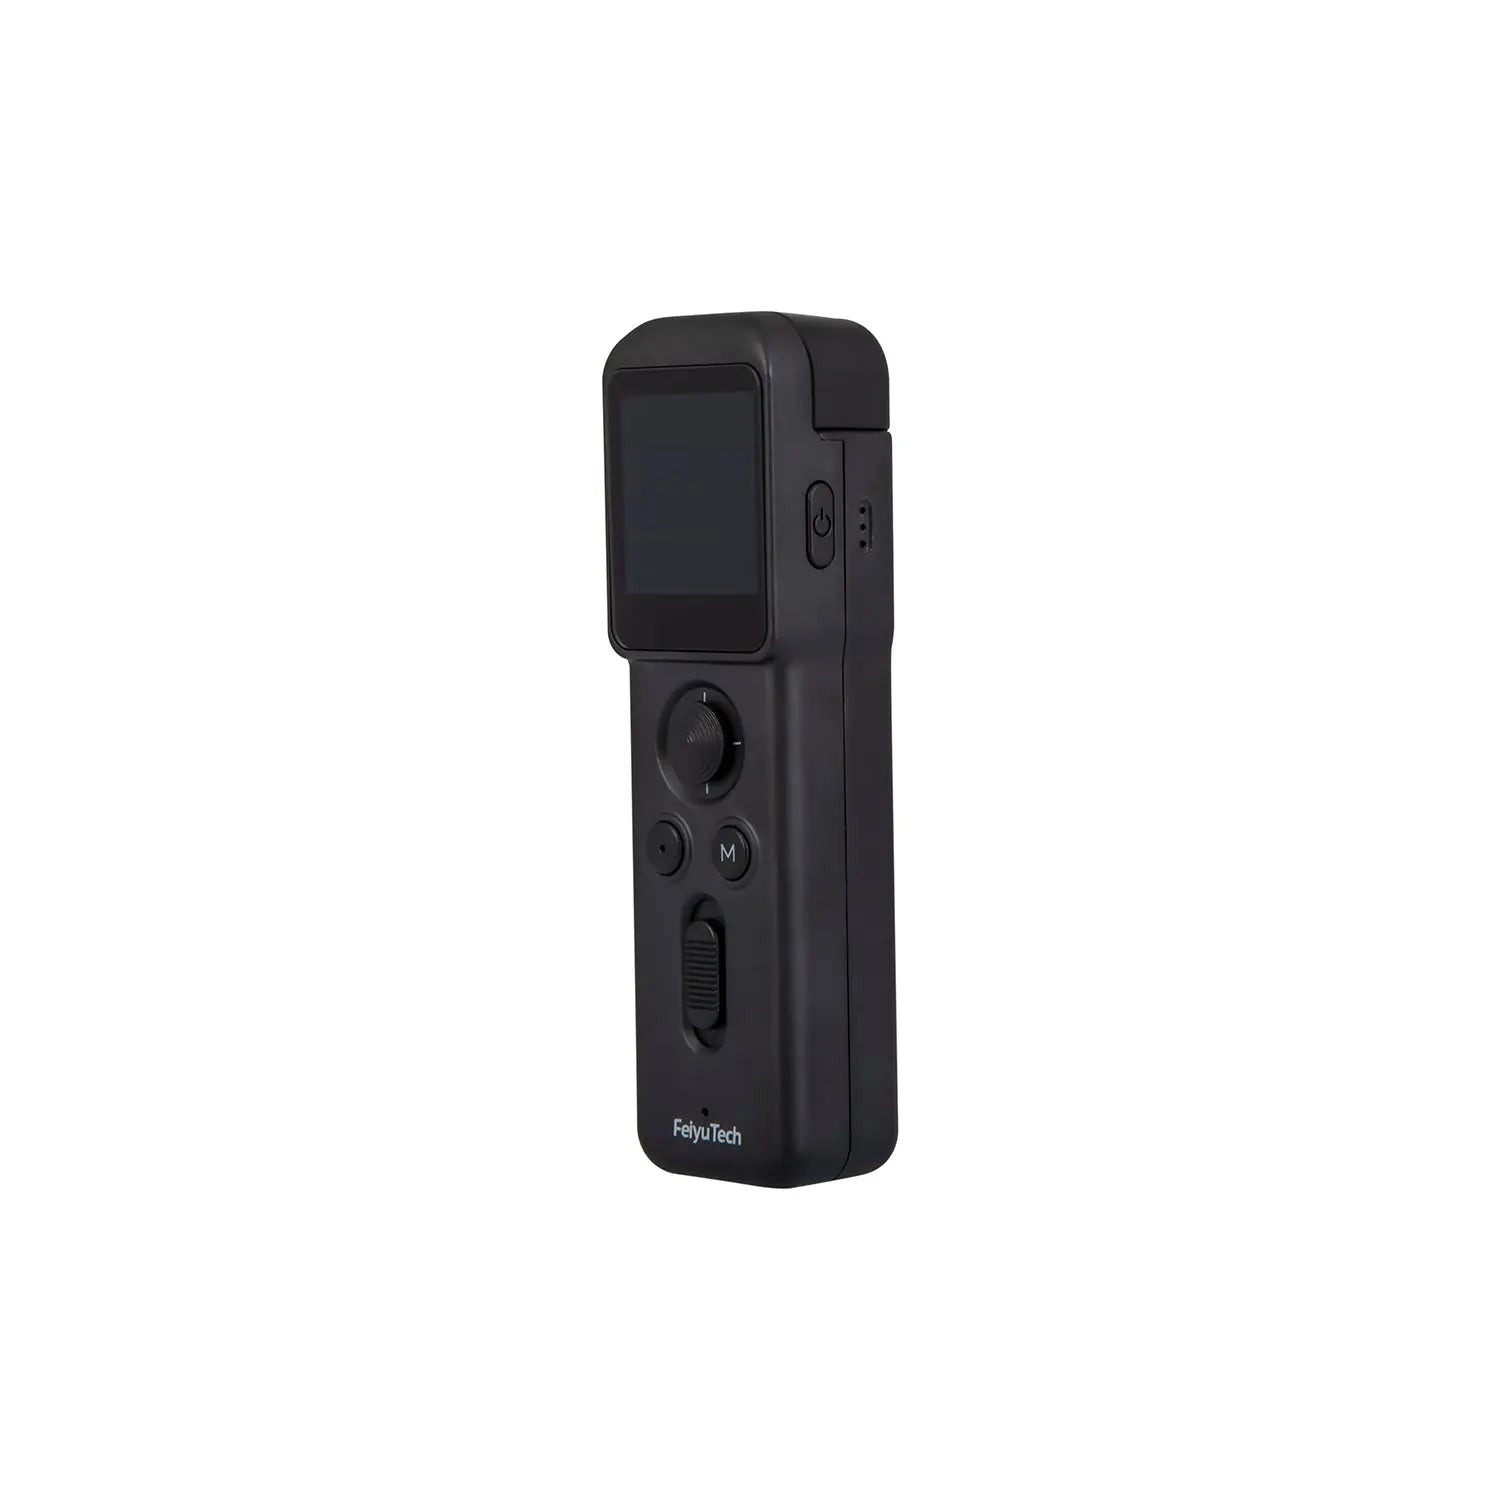 Feiyu Pocket 3 cordless detachable 3-axis gimbal camera5